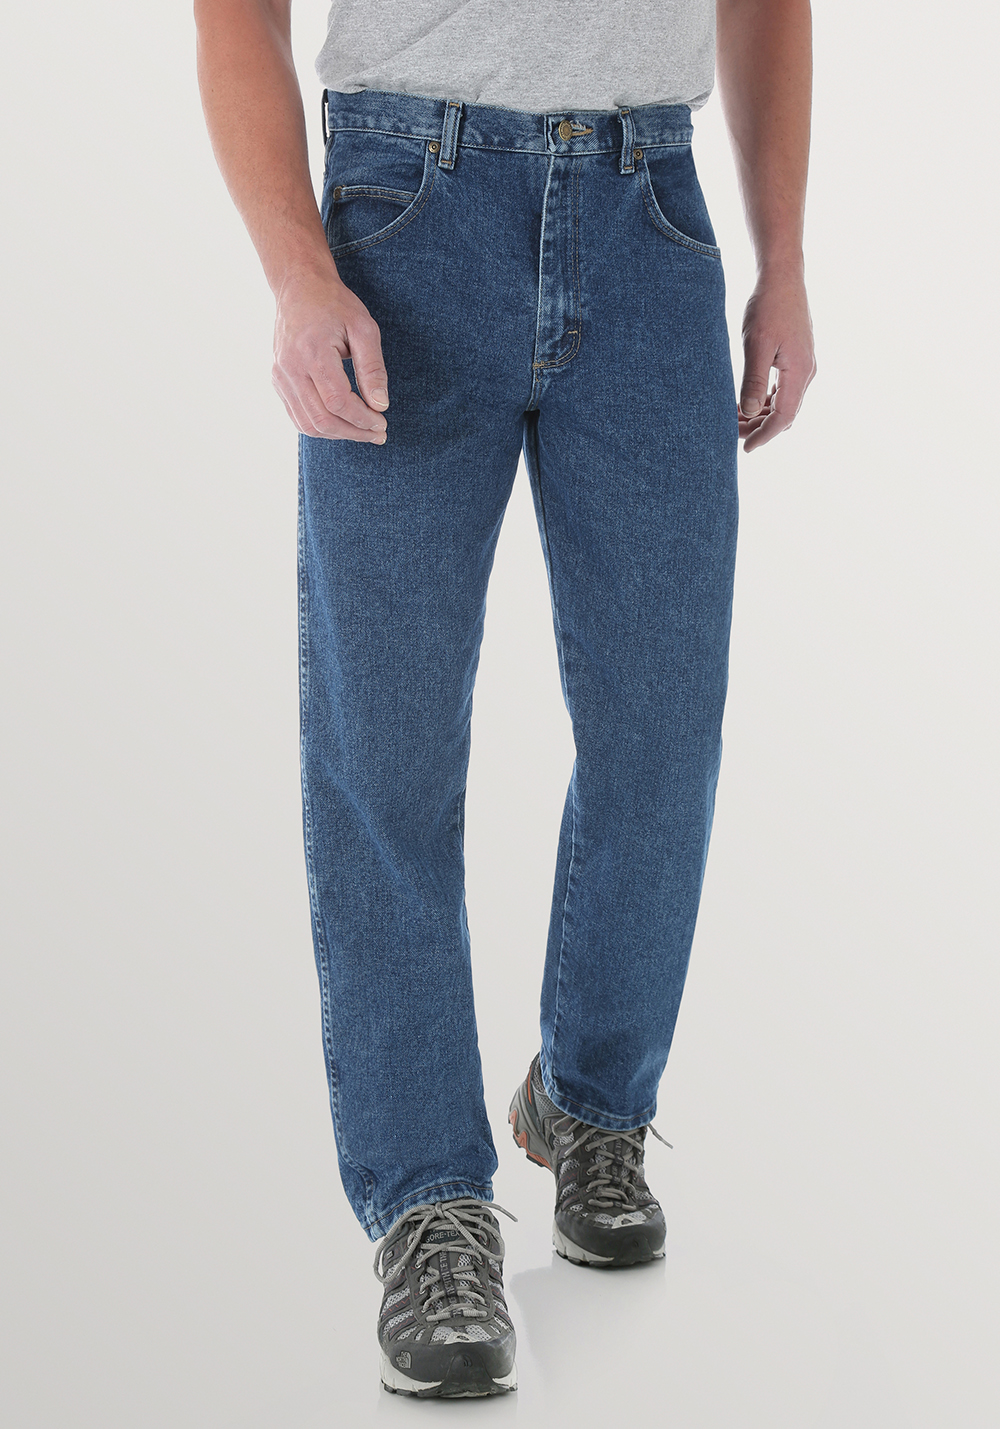 Superdry The Merchant Store - Organic Slim Jeans - Men's Mens Jeans